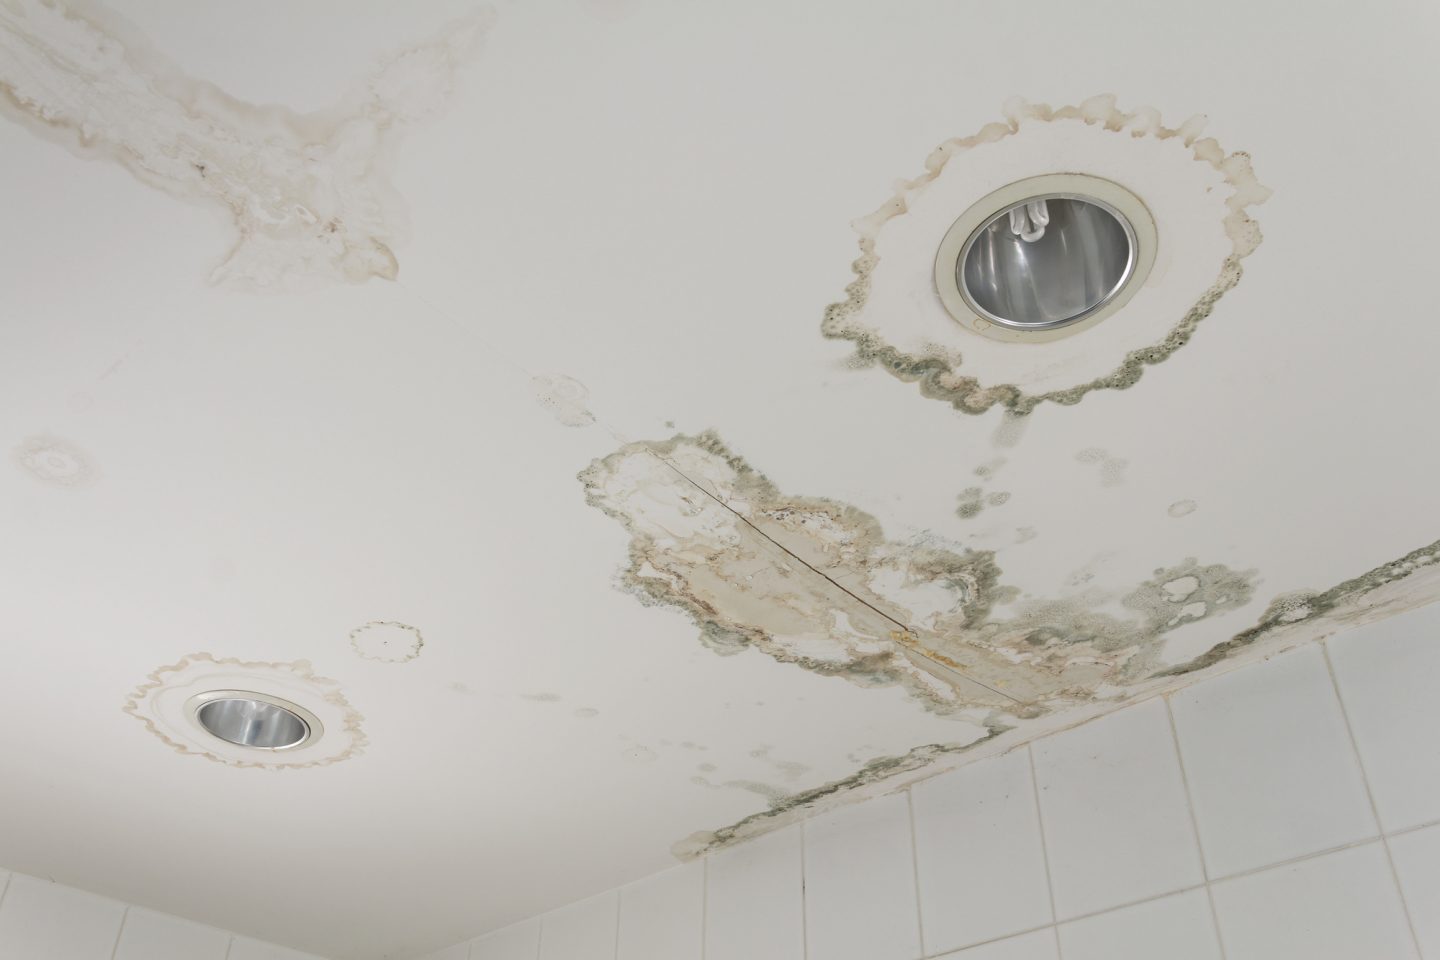 Water Damage Ceiling Repair Tips